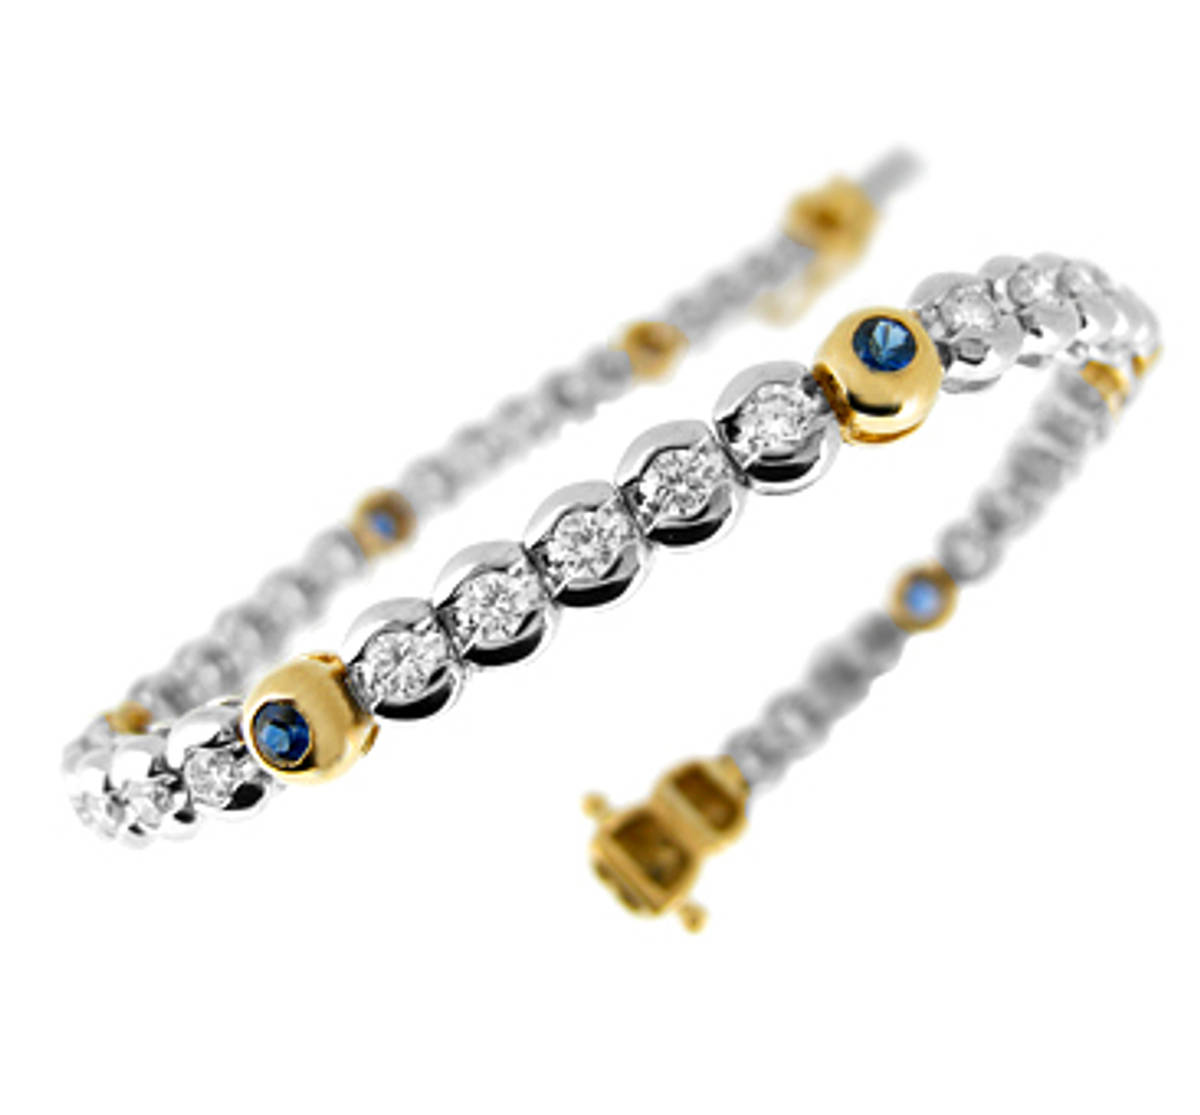 Sapphire diamond rubover set line braceletAvailable in: 18k goldPictured item: 0.70ct sapphire/2.42ct brilliant cut diamond set in 18k yellow/white gold